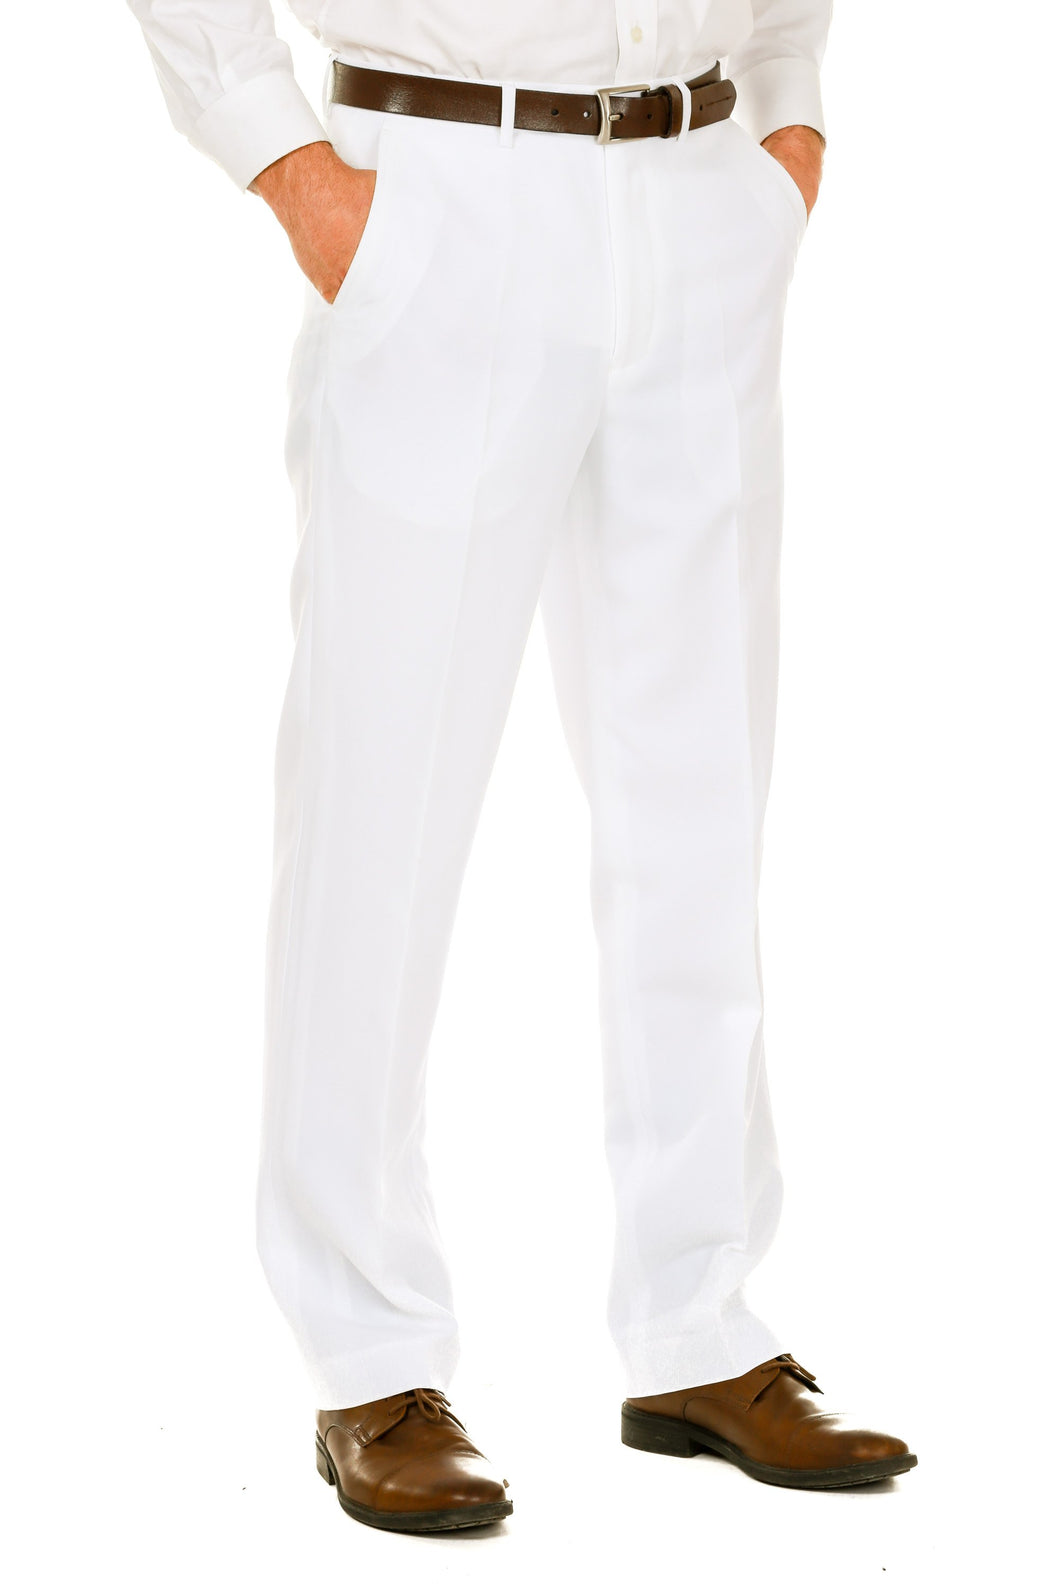 White suit dress pants formal